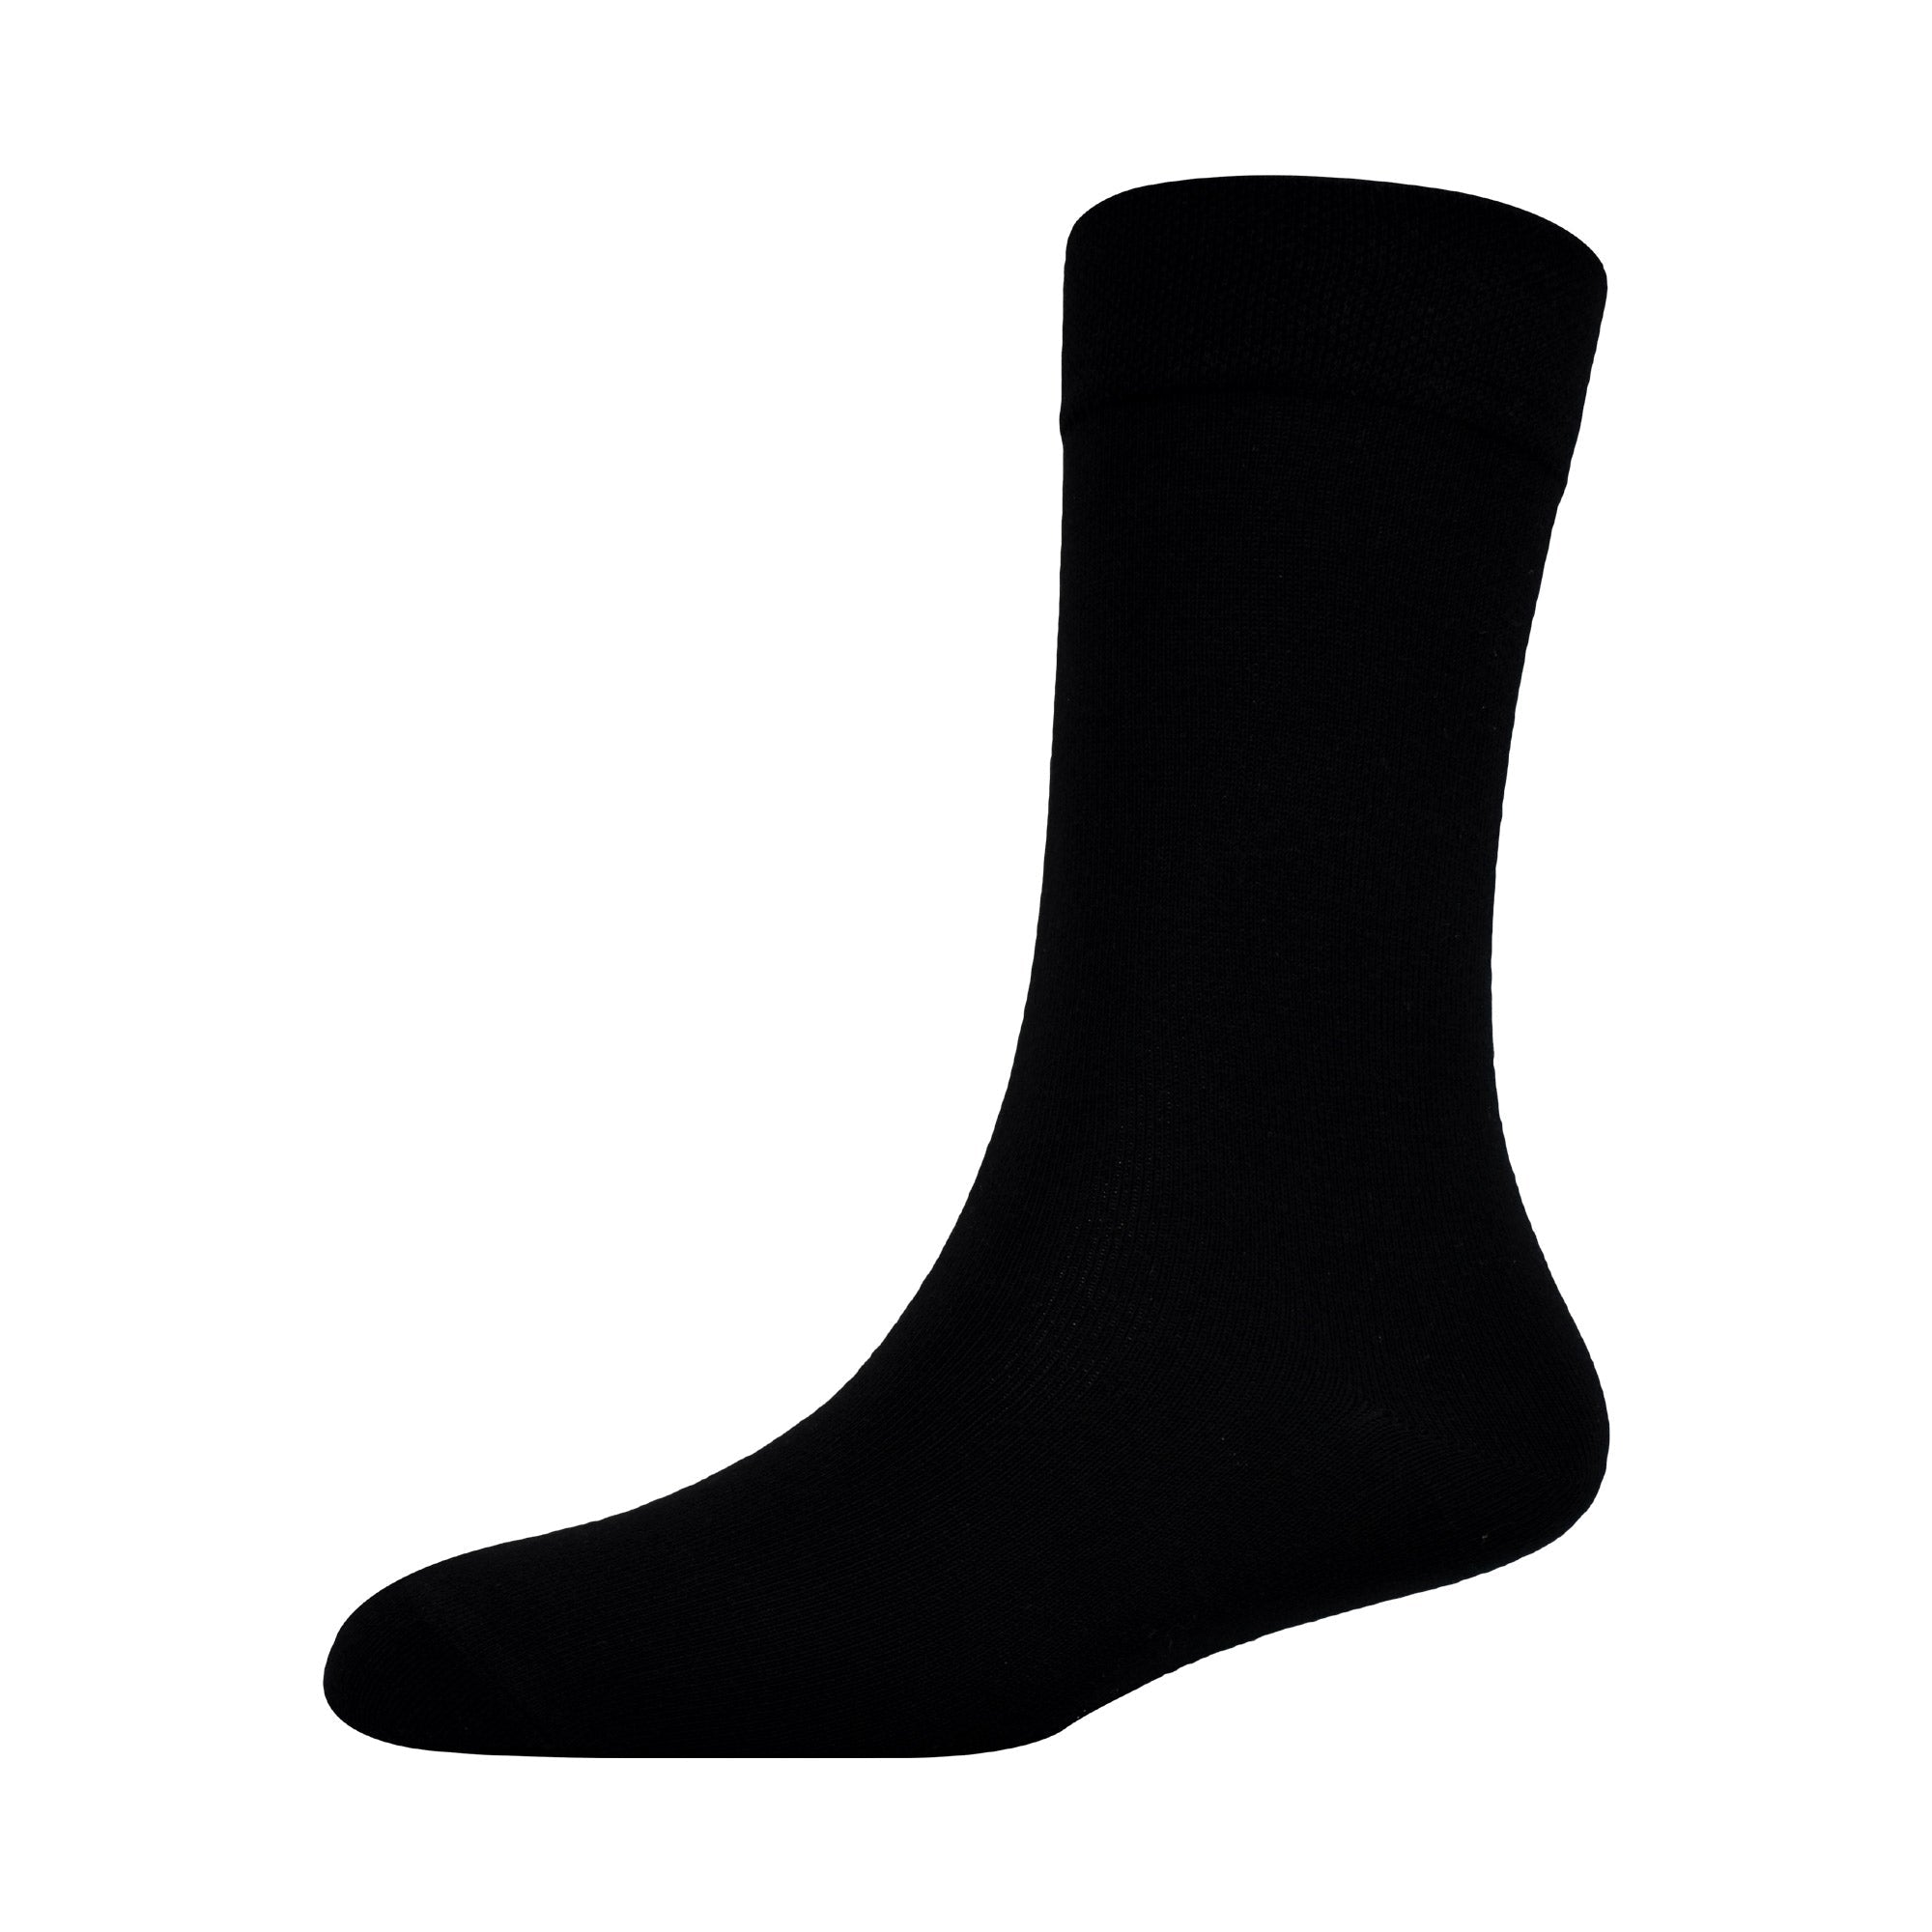 Kids Soft Cotton Black & White School Socks - (Pack of 6 Pairs)